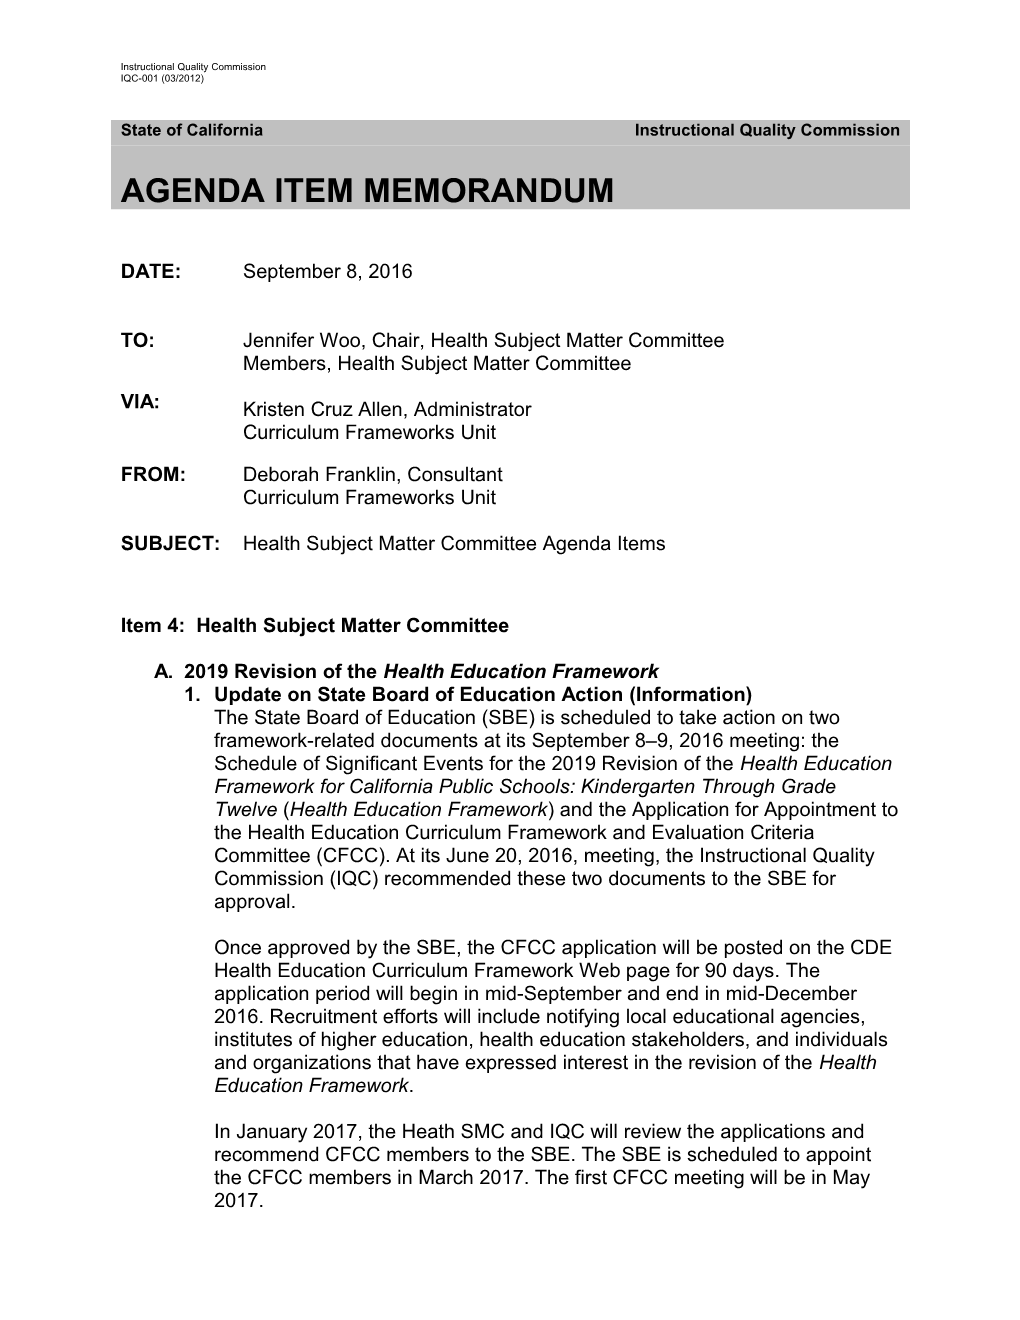 Health SMC Agenda Memo - Instructional Quality Commission (CA Dept of Education)